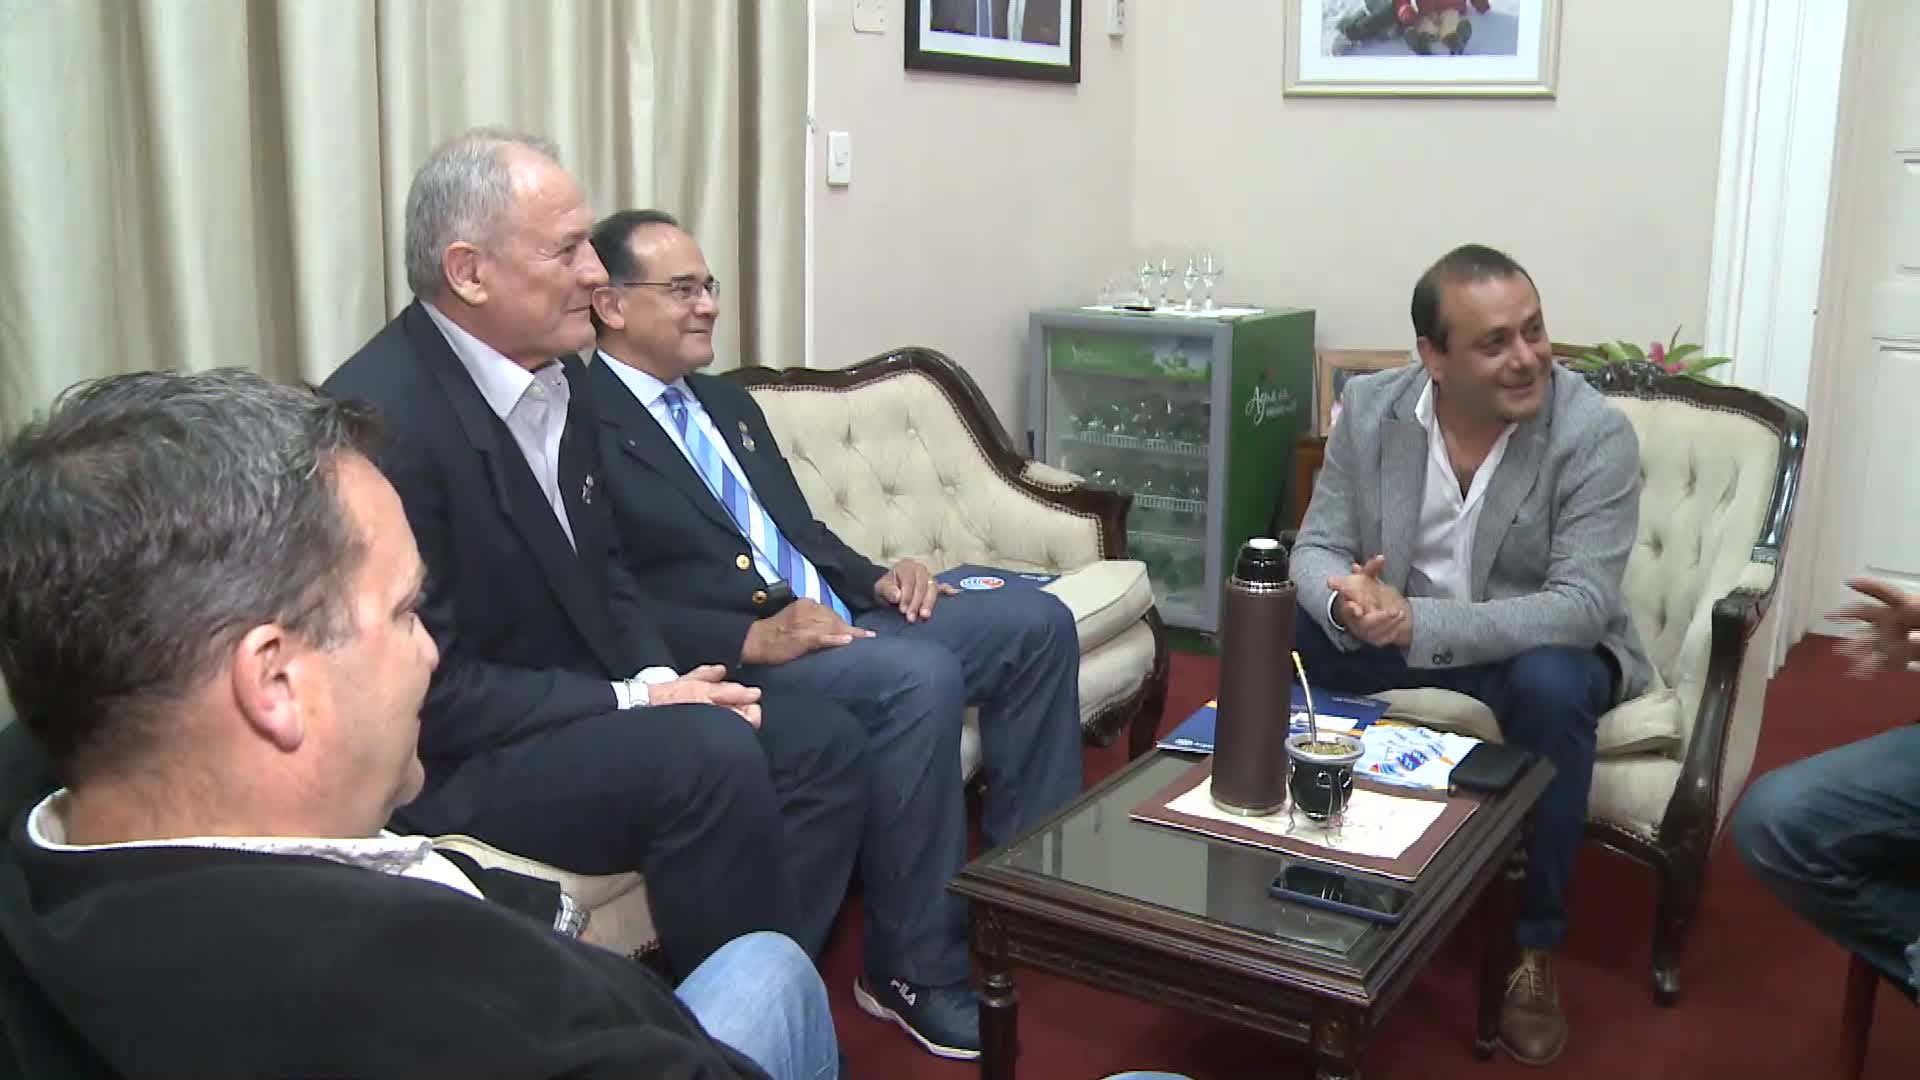 El vicegobernador Herrera Ahuad se reunió con directivos del Rotary Club